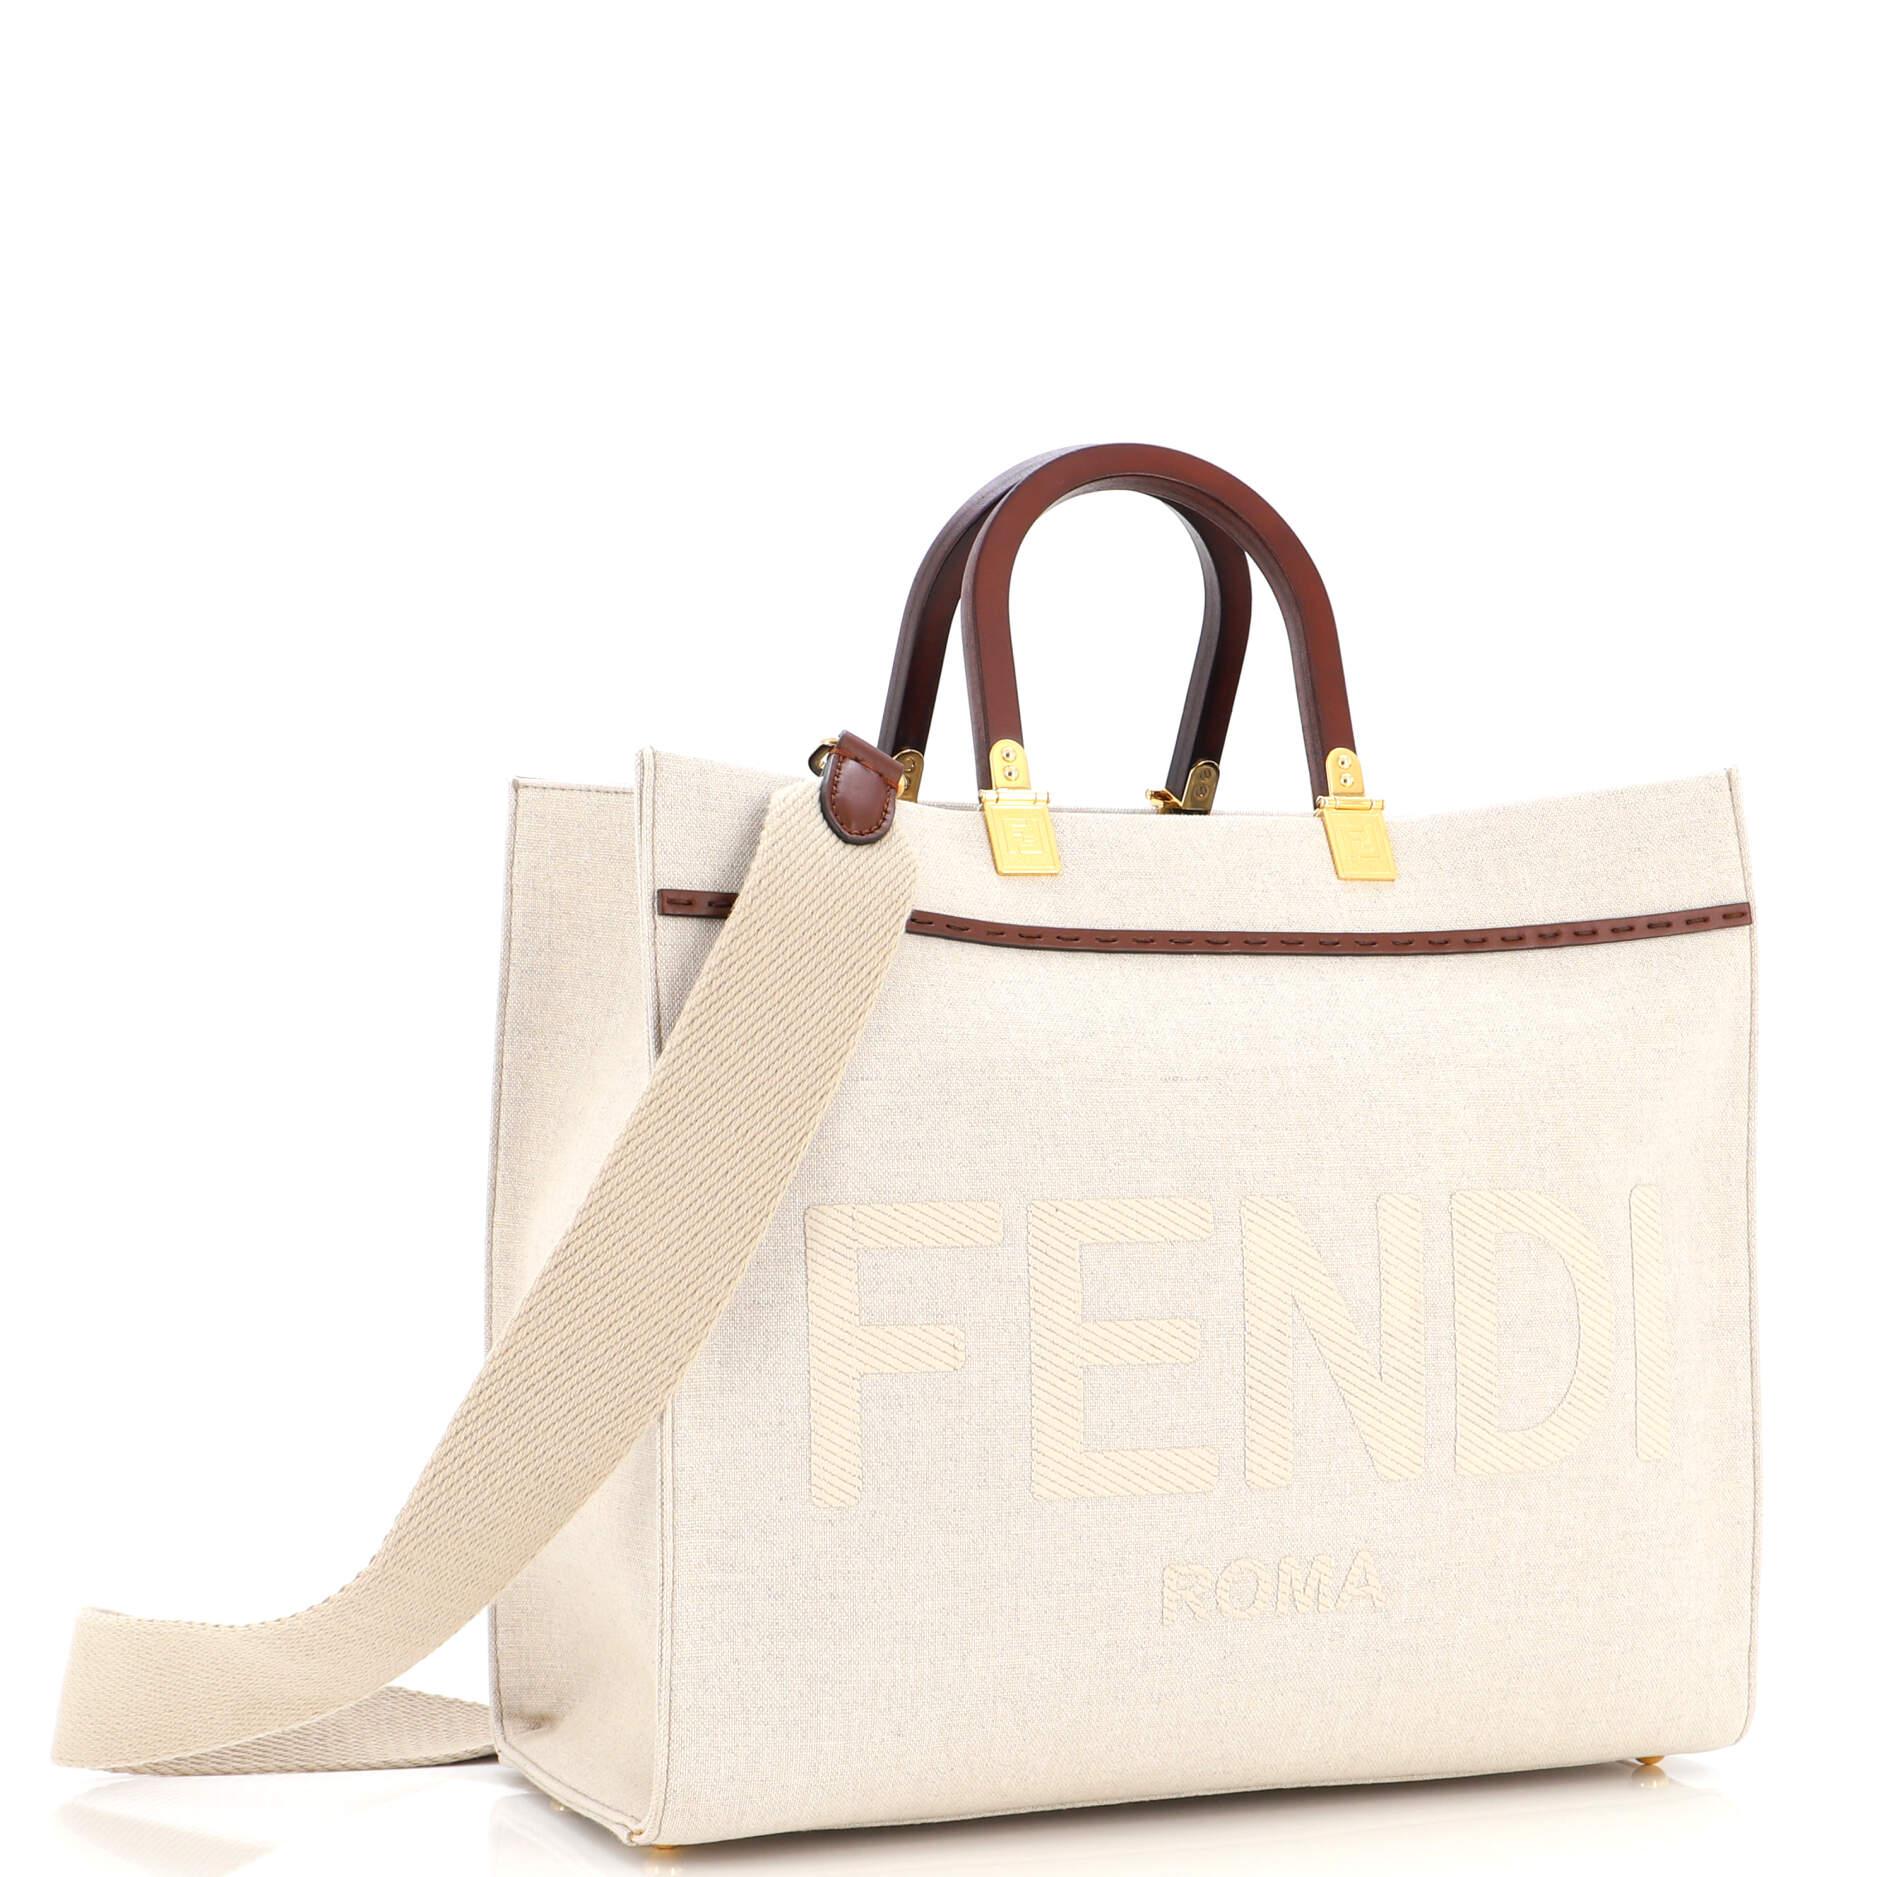 Fendi Sunshine Bags - 5 For Sale on 1stDibs